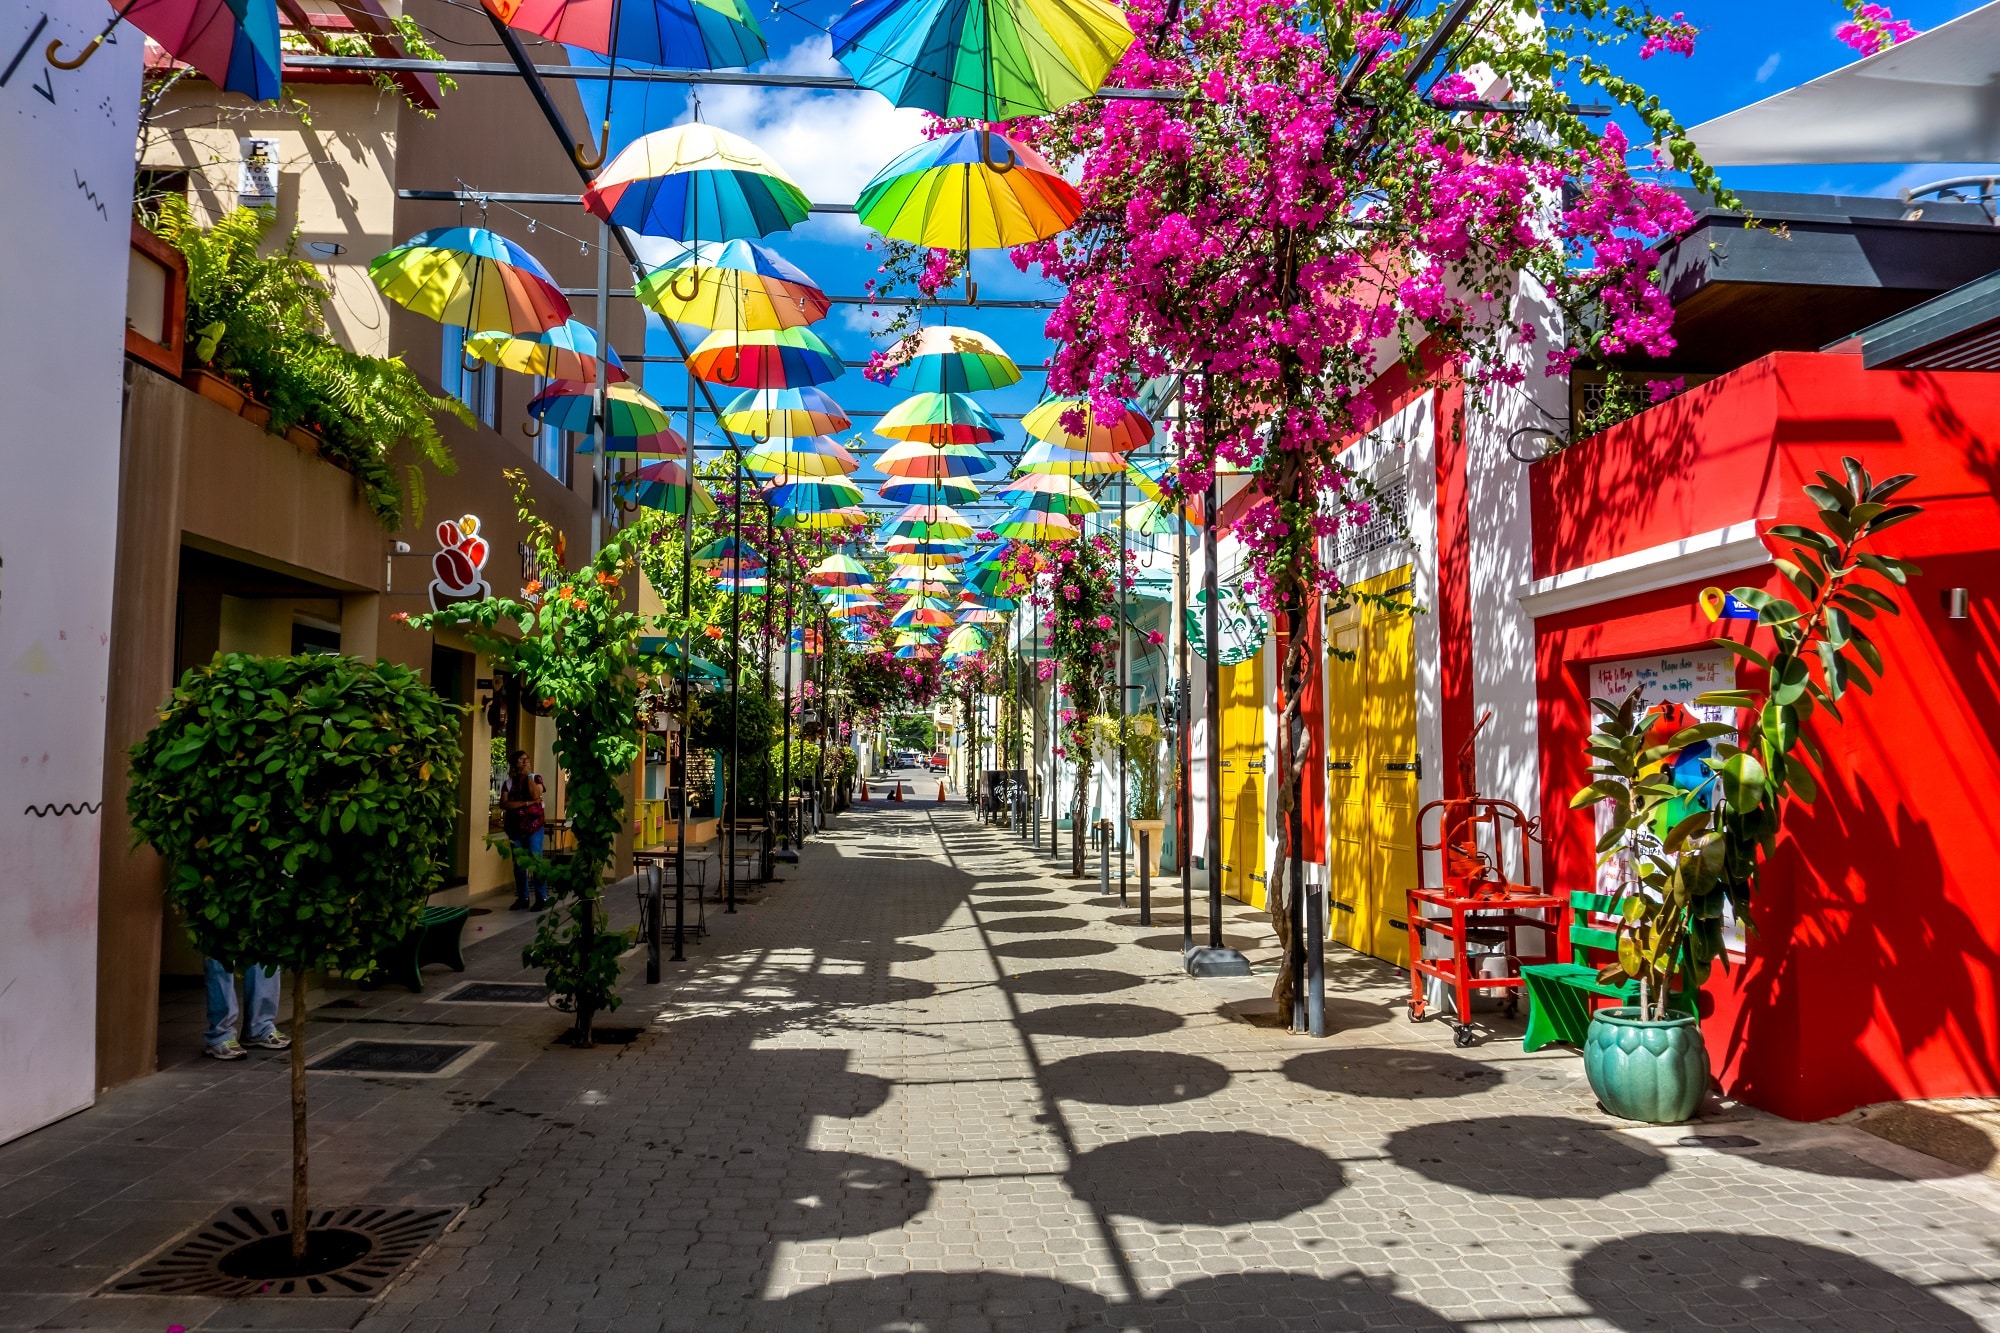 umbrella street in Puerto Plata Dominican Republic with vibrant colors